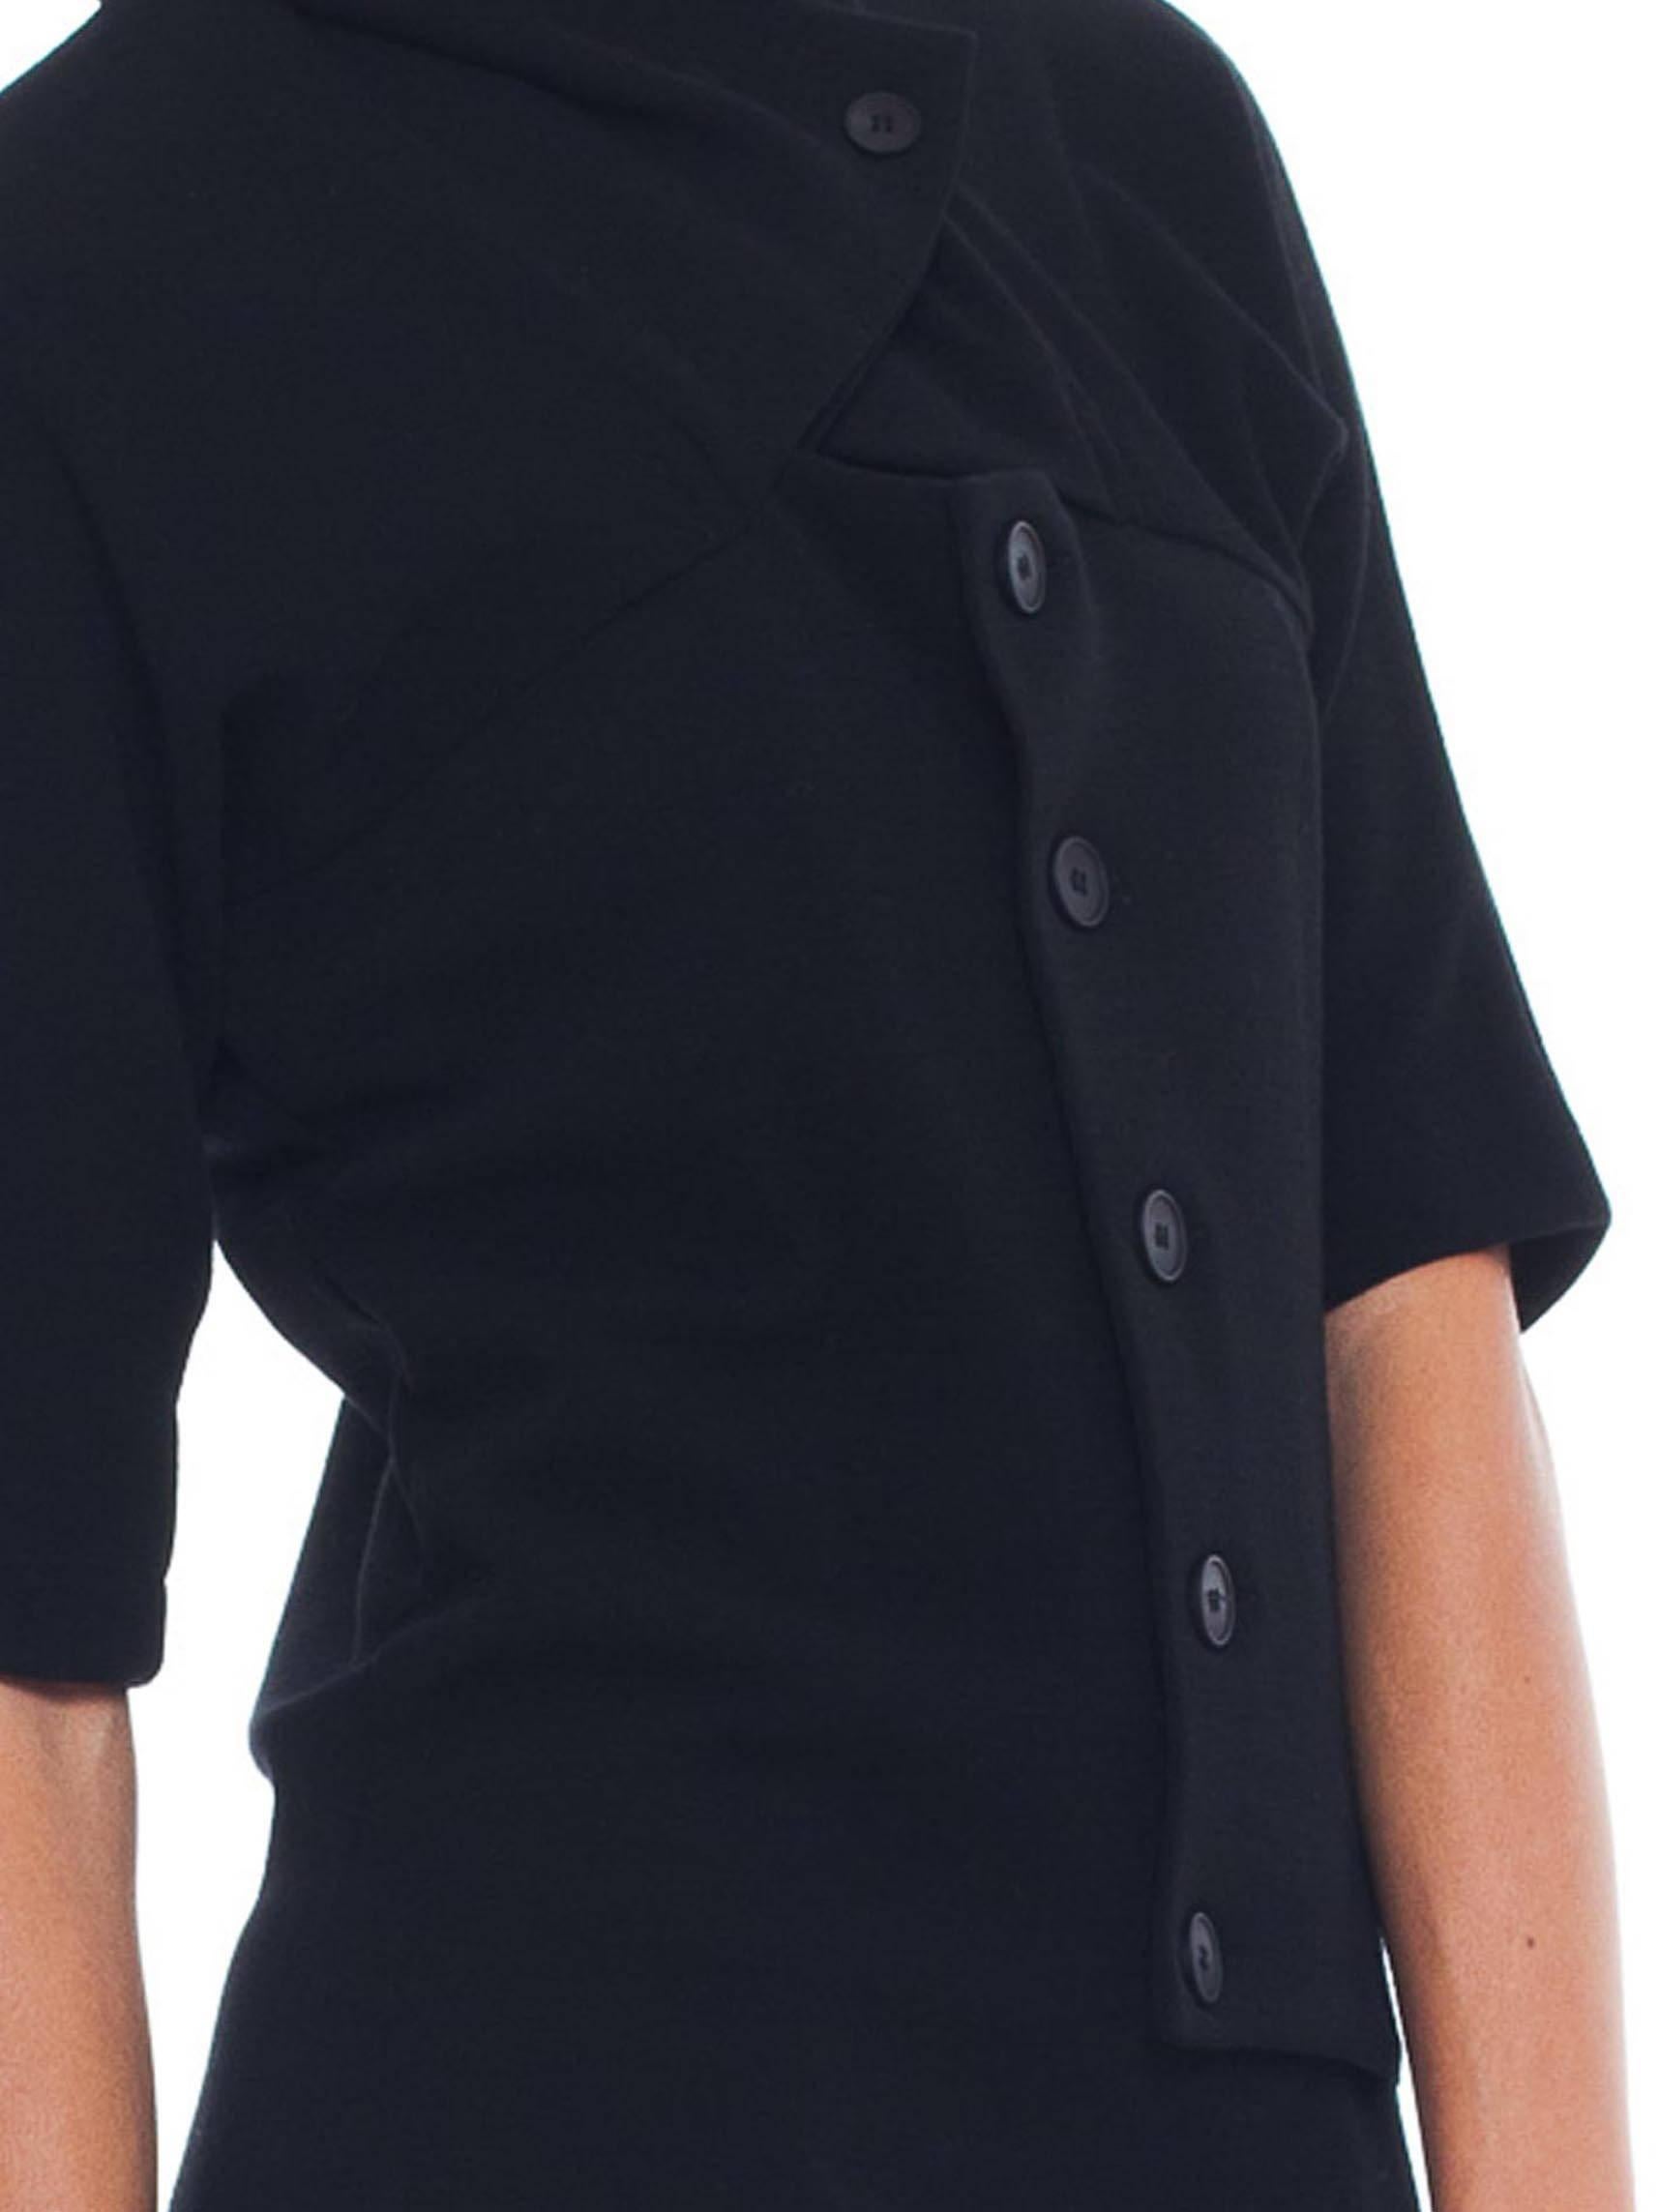 1990S YOHJI YAMAMOTO Black Wool Knit Avant Garde Shirt Dress With Changeable Co For Sale 2